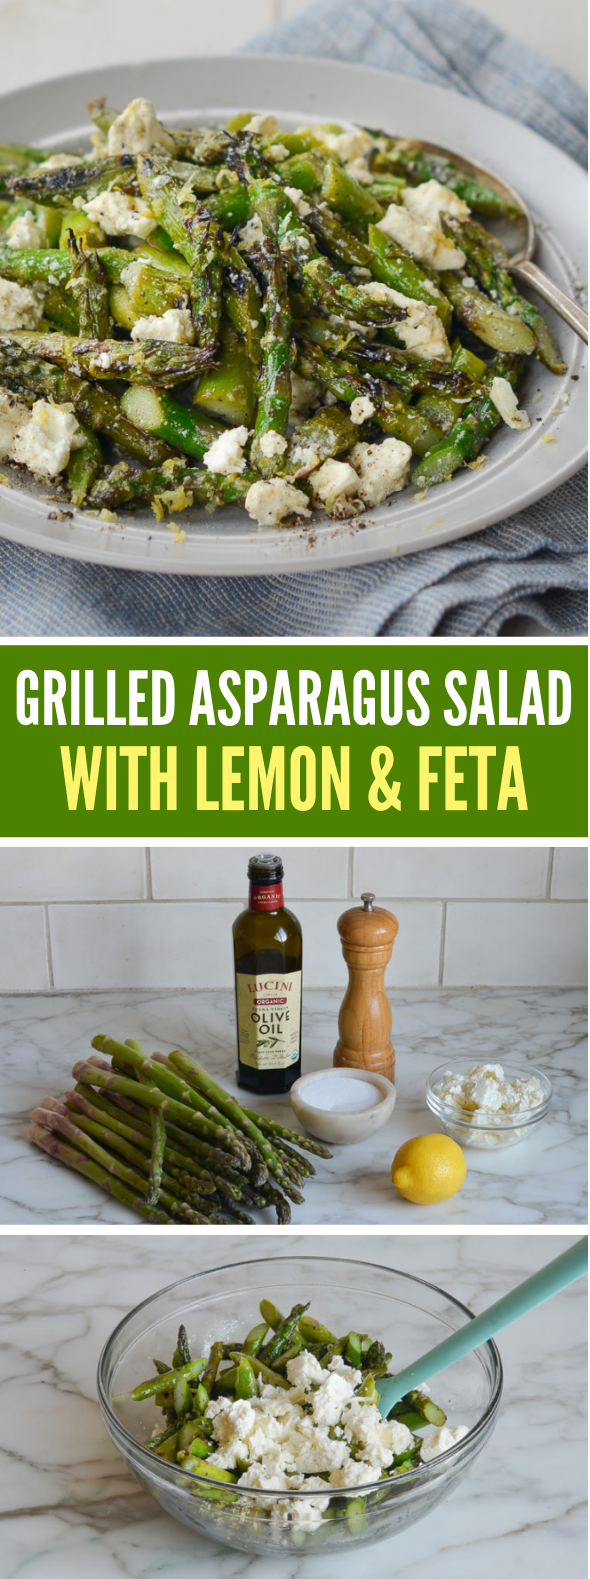 Grilled Asparagus Salad with Lemon & Feta #vegetarian #glutenfree